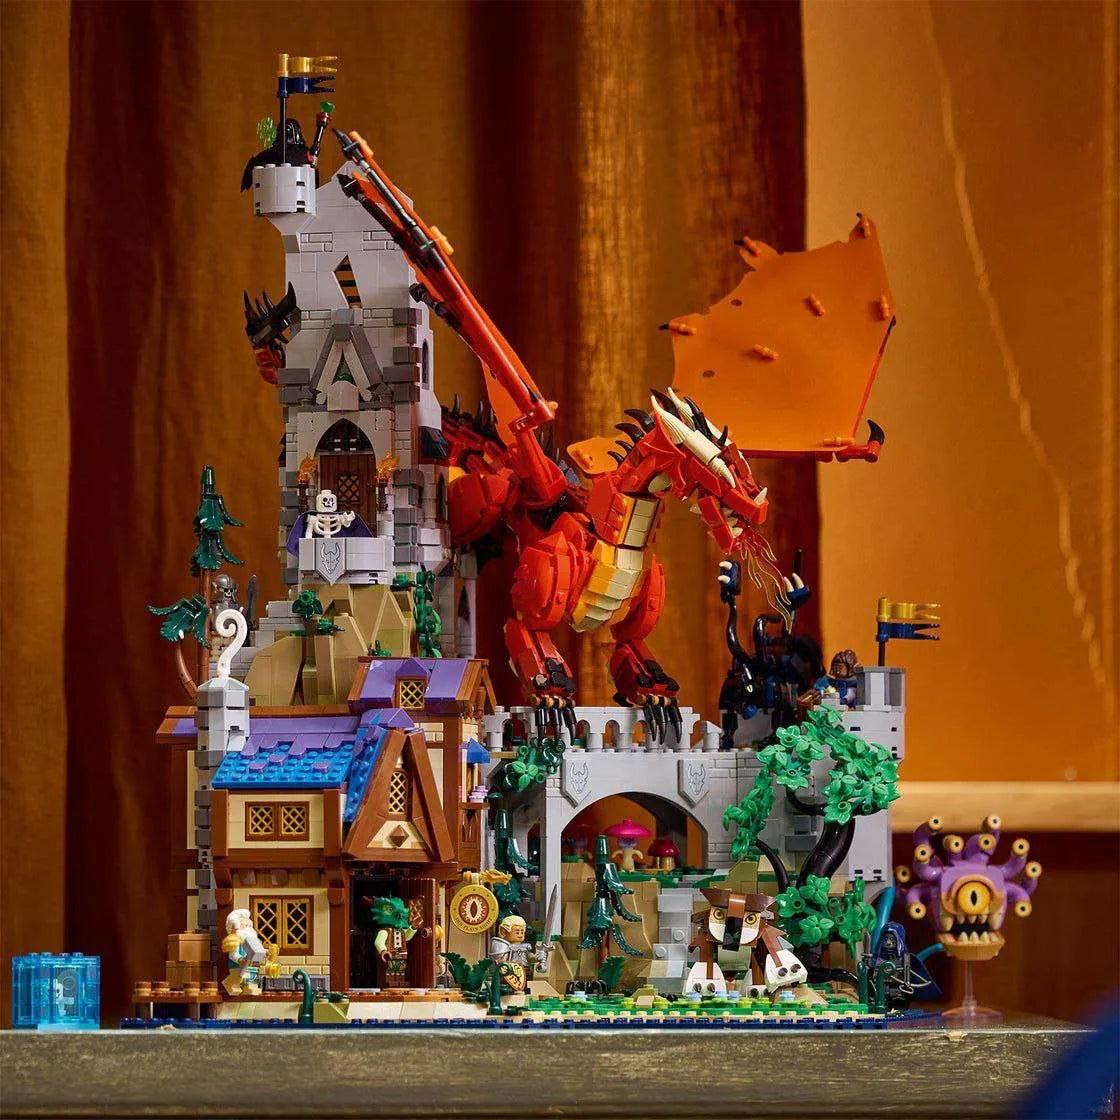 LEGO Dungeons & Dragons: The Red Dragon’s Tale 21348 Ideas LEGO IDEAS @ 2TTOYS LEGO €. 499.99